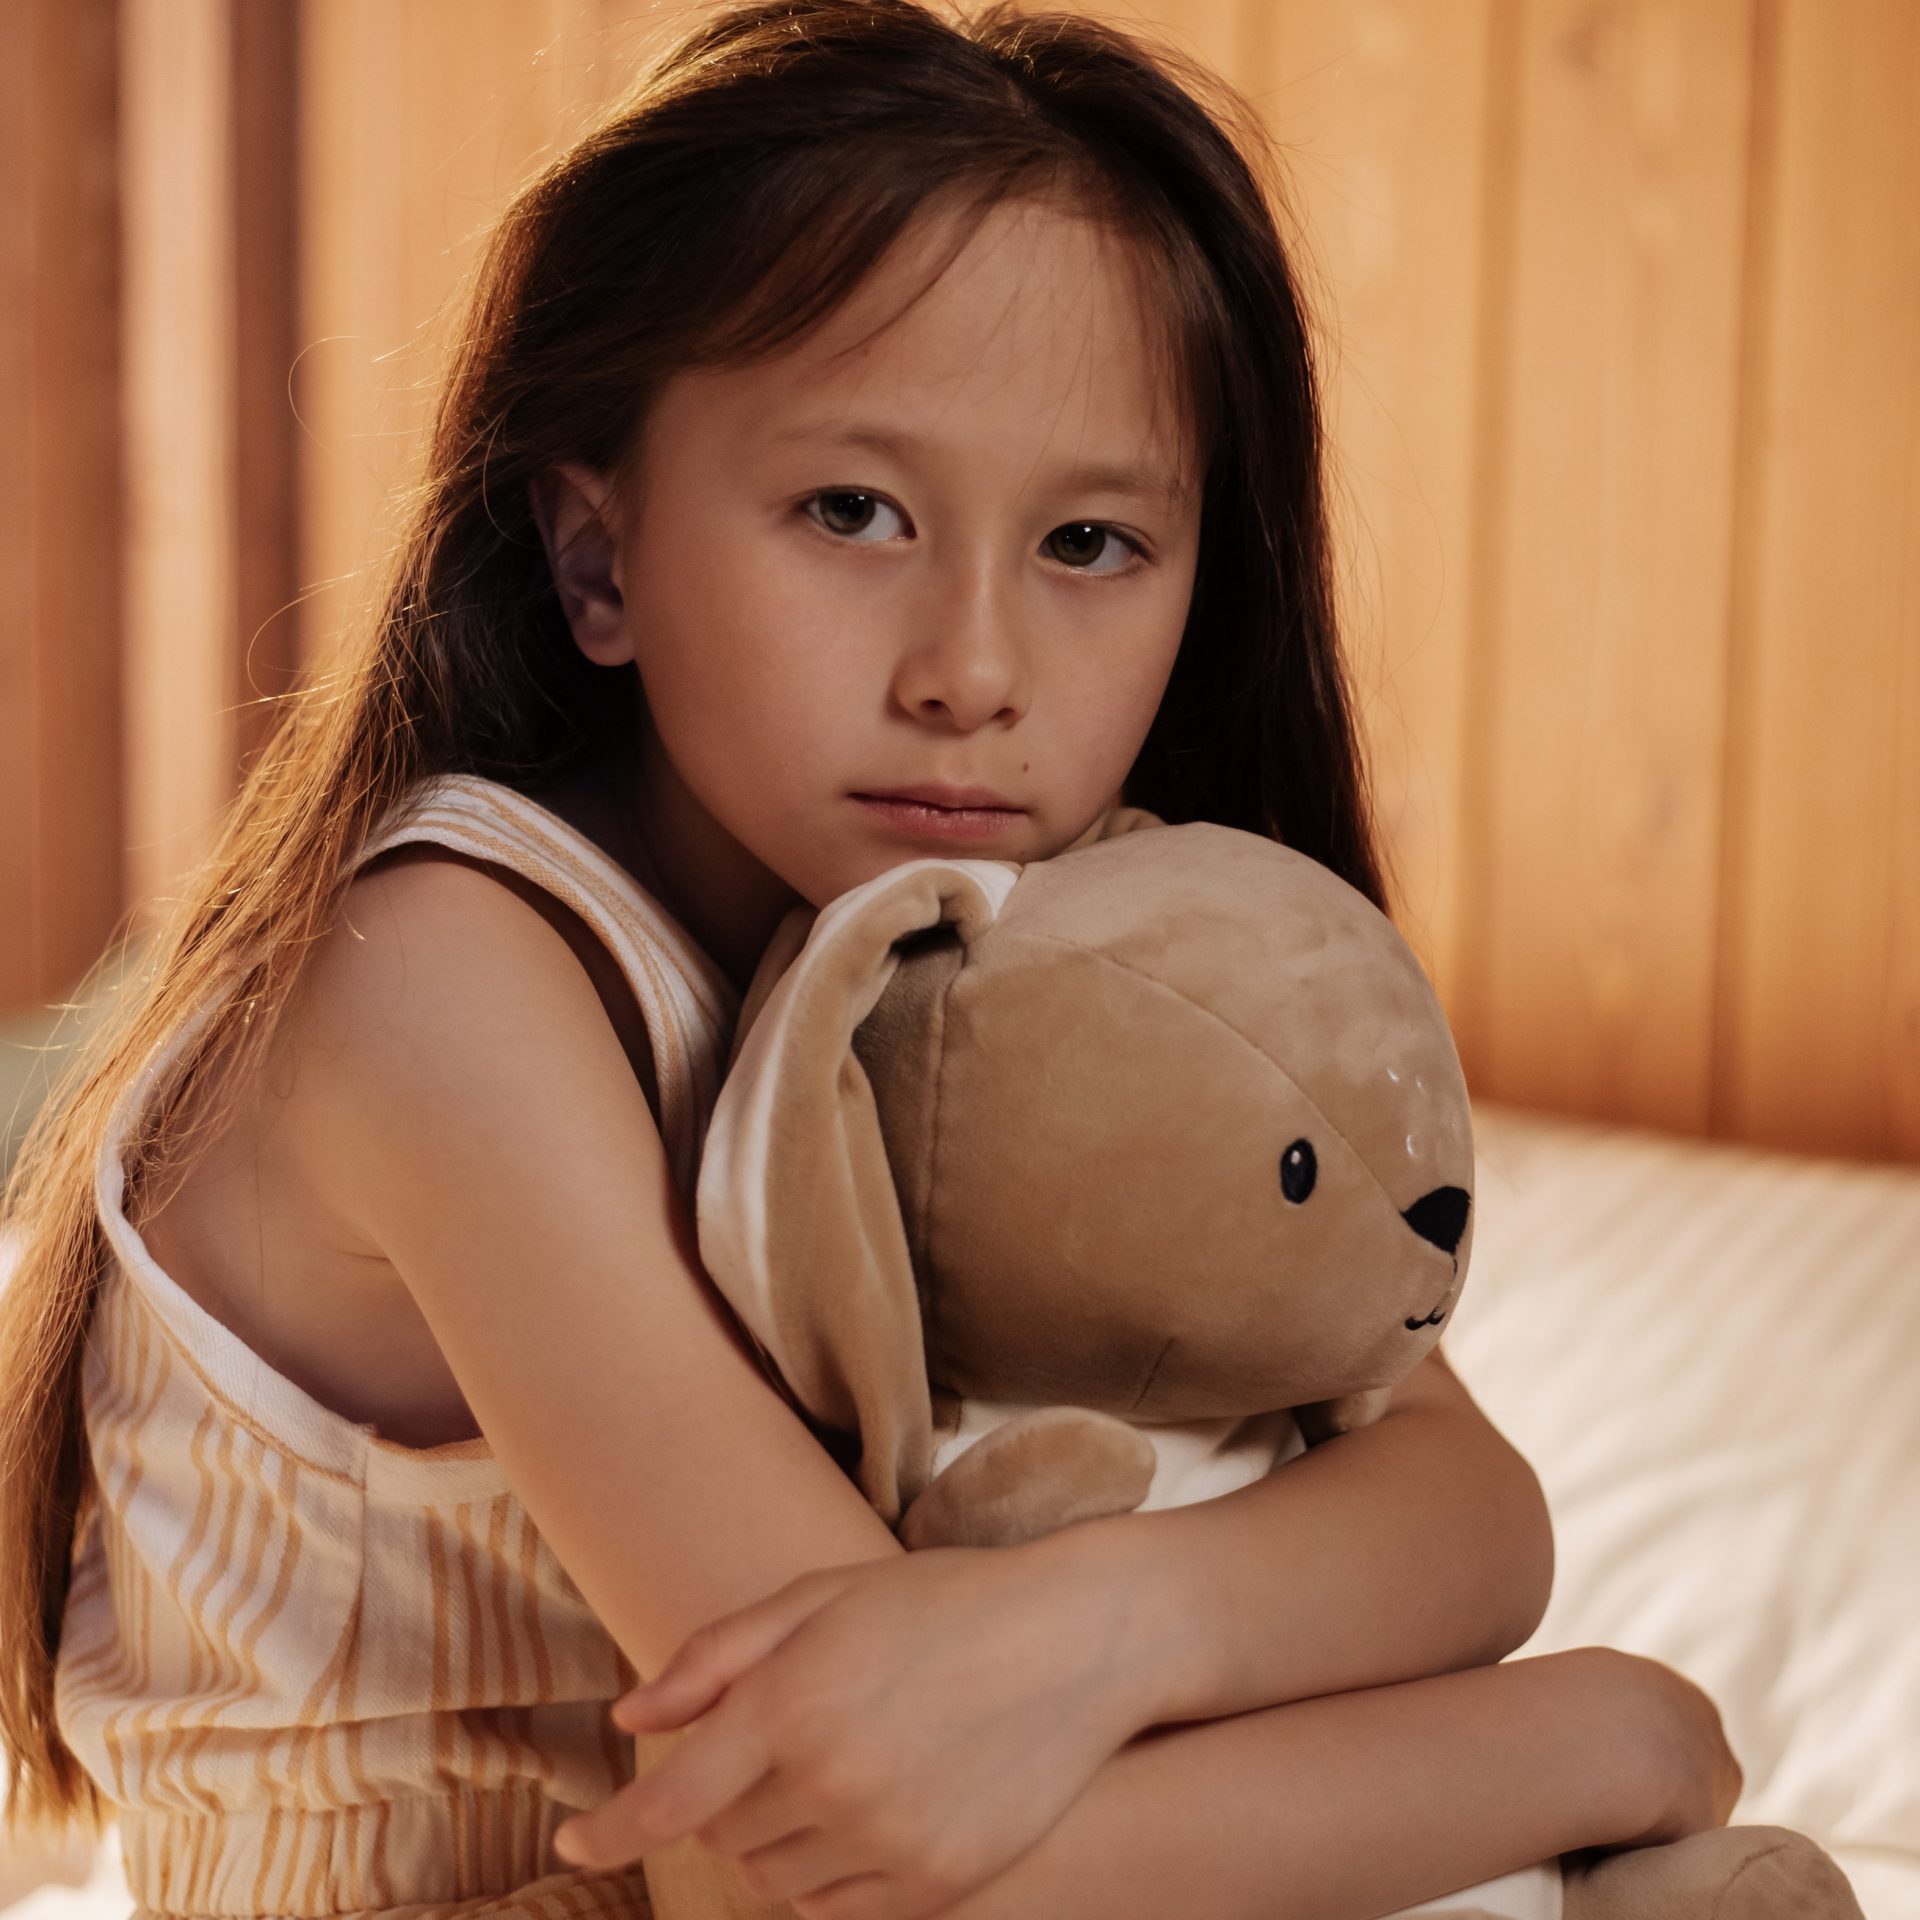 Little girl holding teddy bear